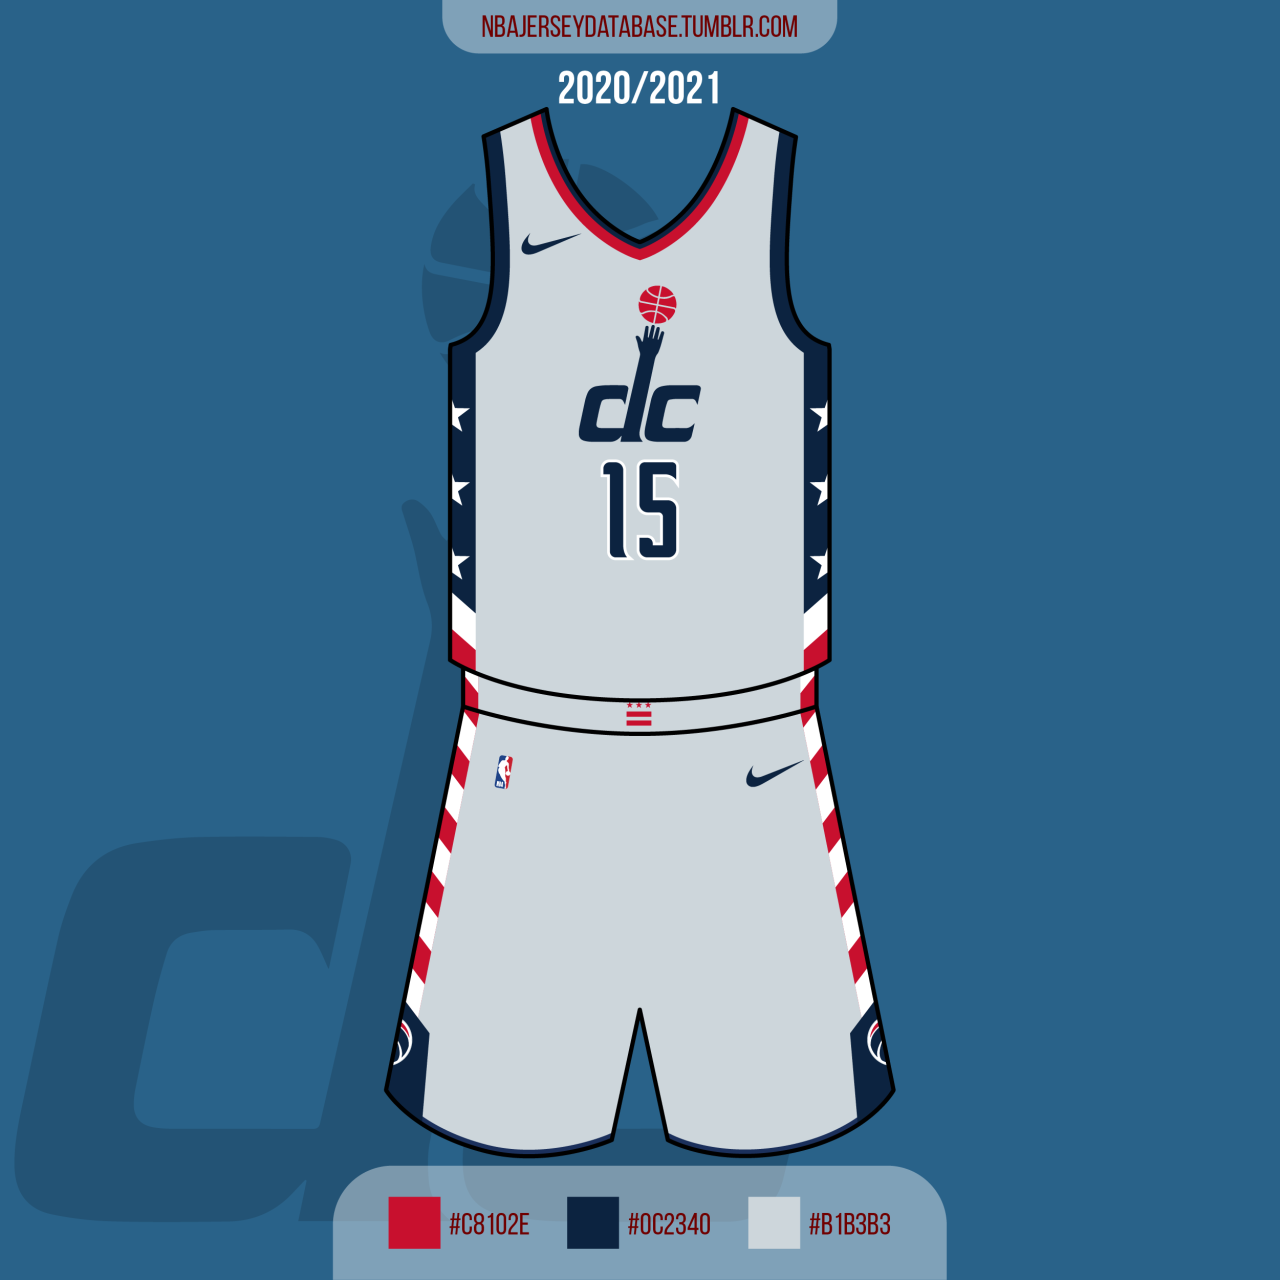 NBA Jersey Database  Nba jersey, Washington capitals, Nba